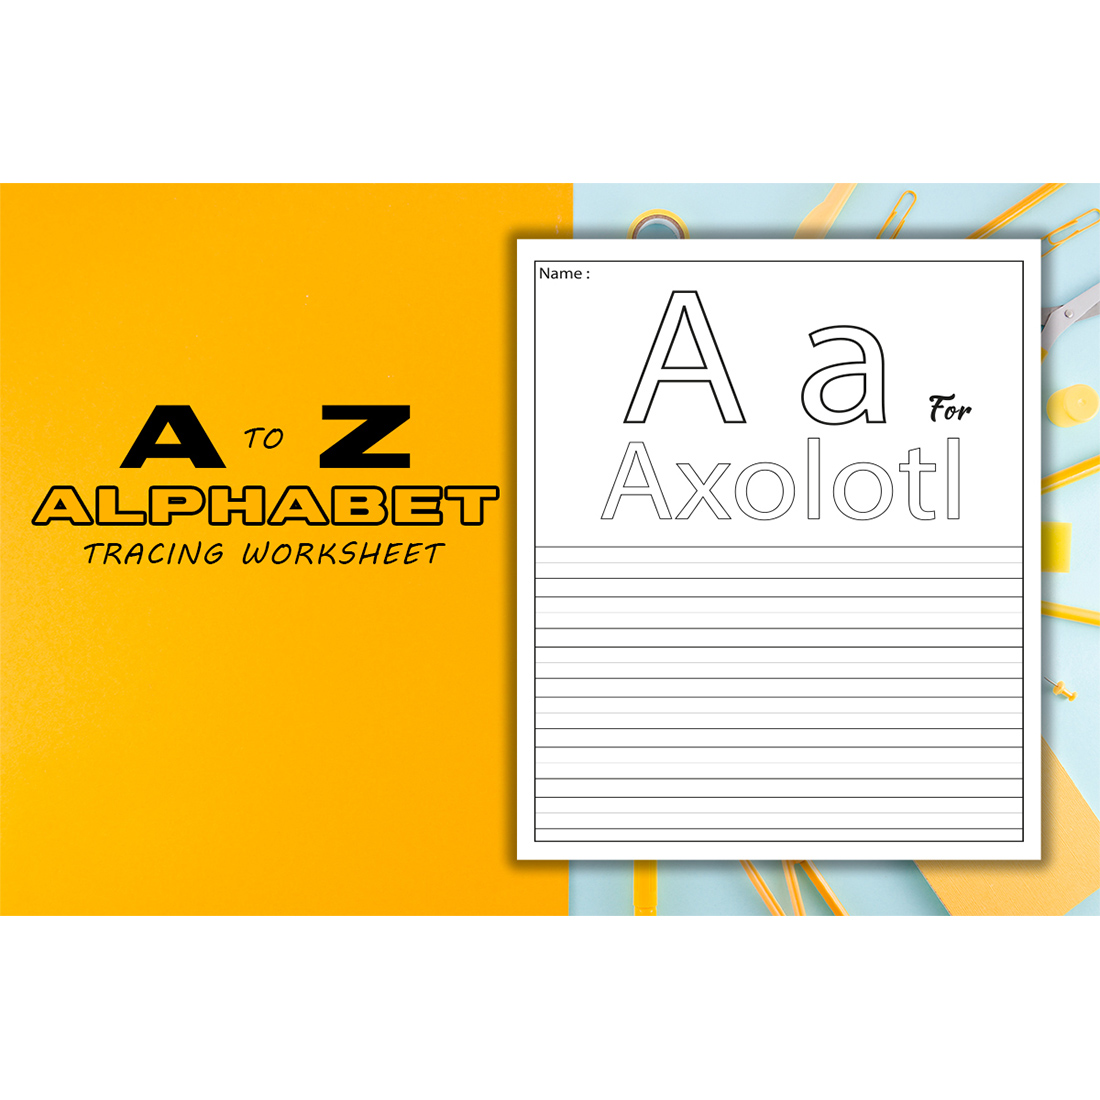 A to Z Mix Alphabets Word Tracing KDP Worksheets Bundle V.2 cover image.